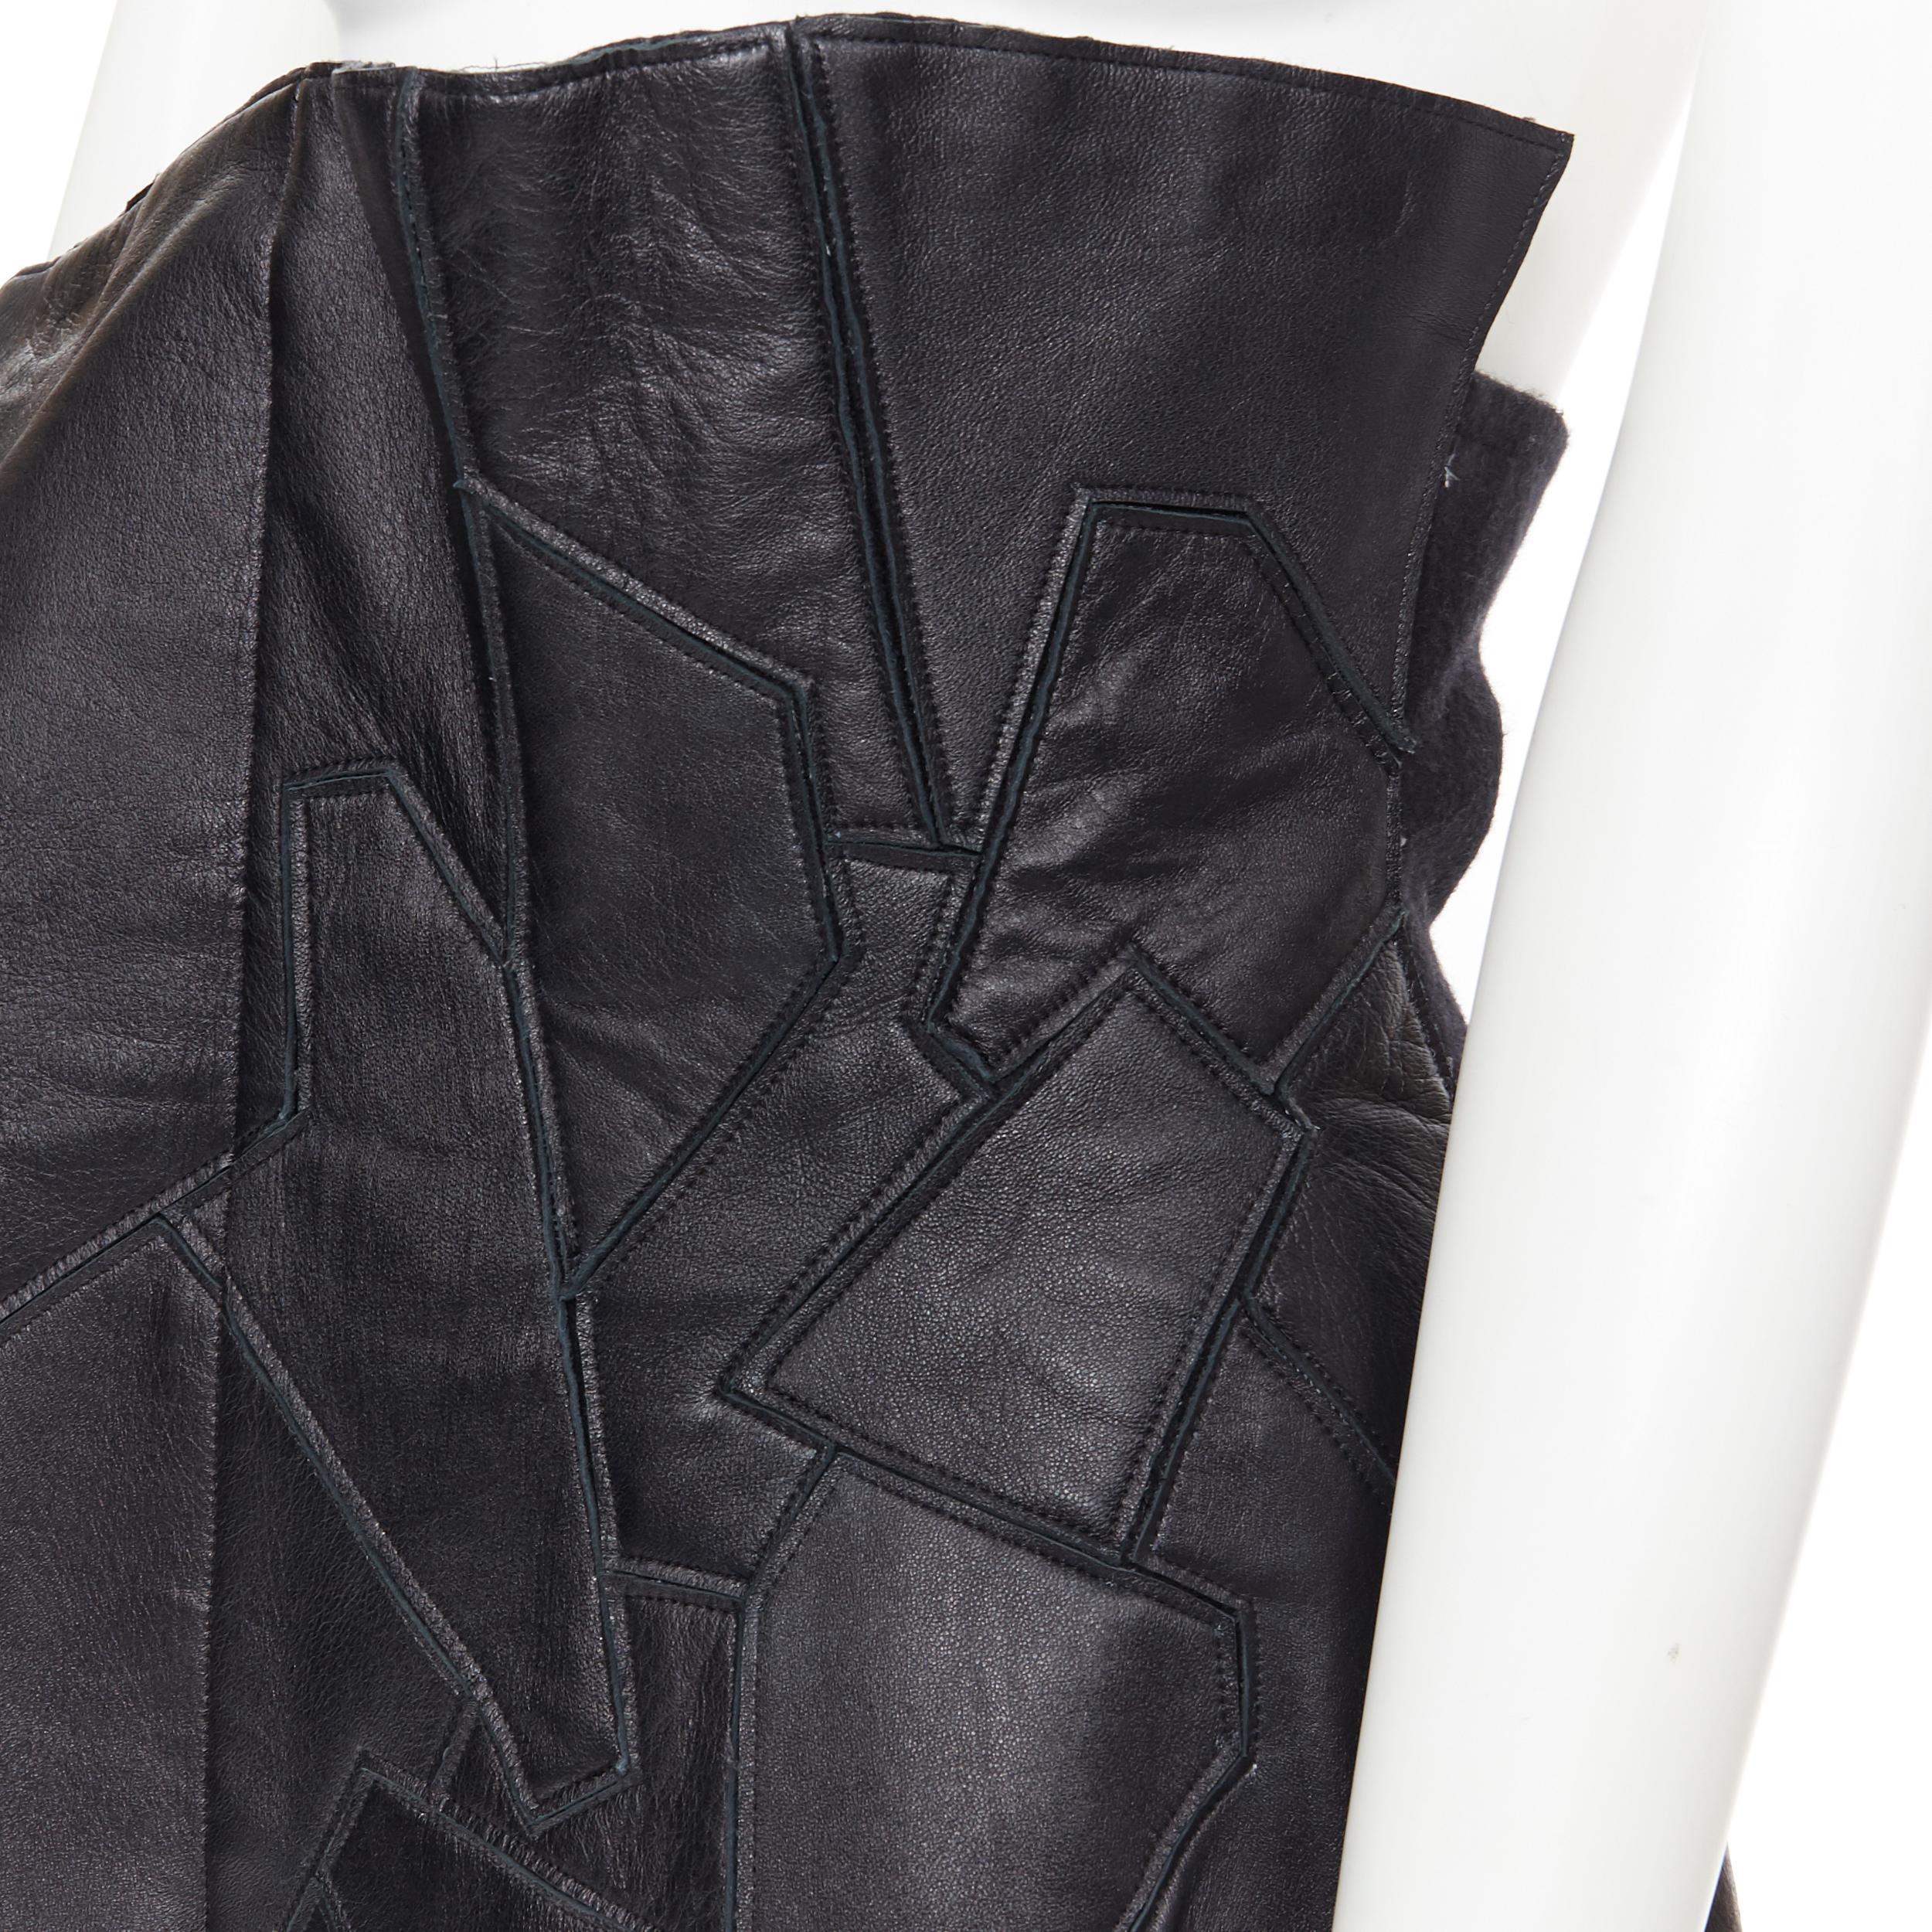 new YOHJI YAMAMOTO AW18 Runway black leather patchwork corset bustier belt JP3 L
Brand: Yohji Yamamoto
Designer: Yohji Yamamoto
Collection: AW18
Model Name / Style: Leather bustier
Material: Leather, wool
Color: Black
Pattern: Solid
Closure: